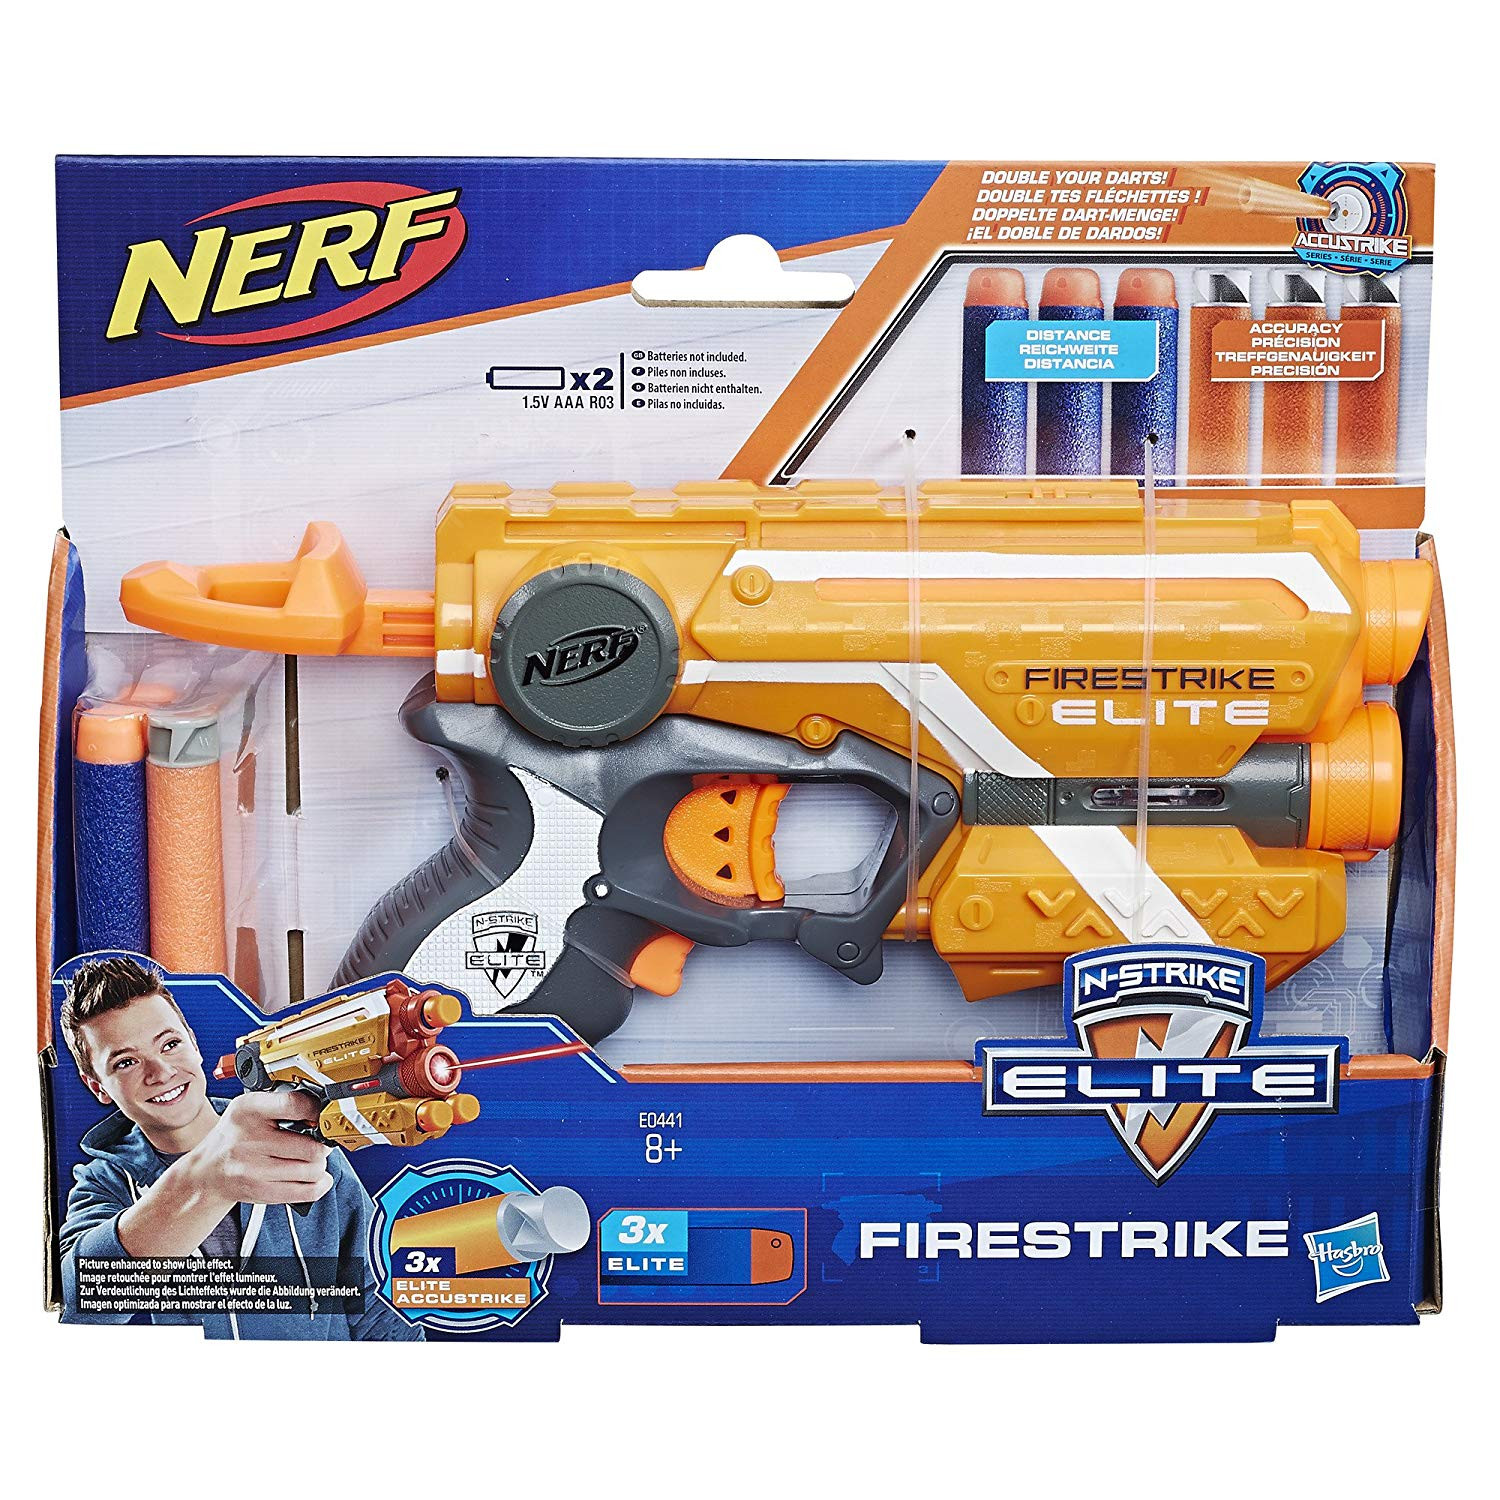 Nerf firestrike 